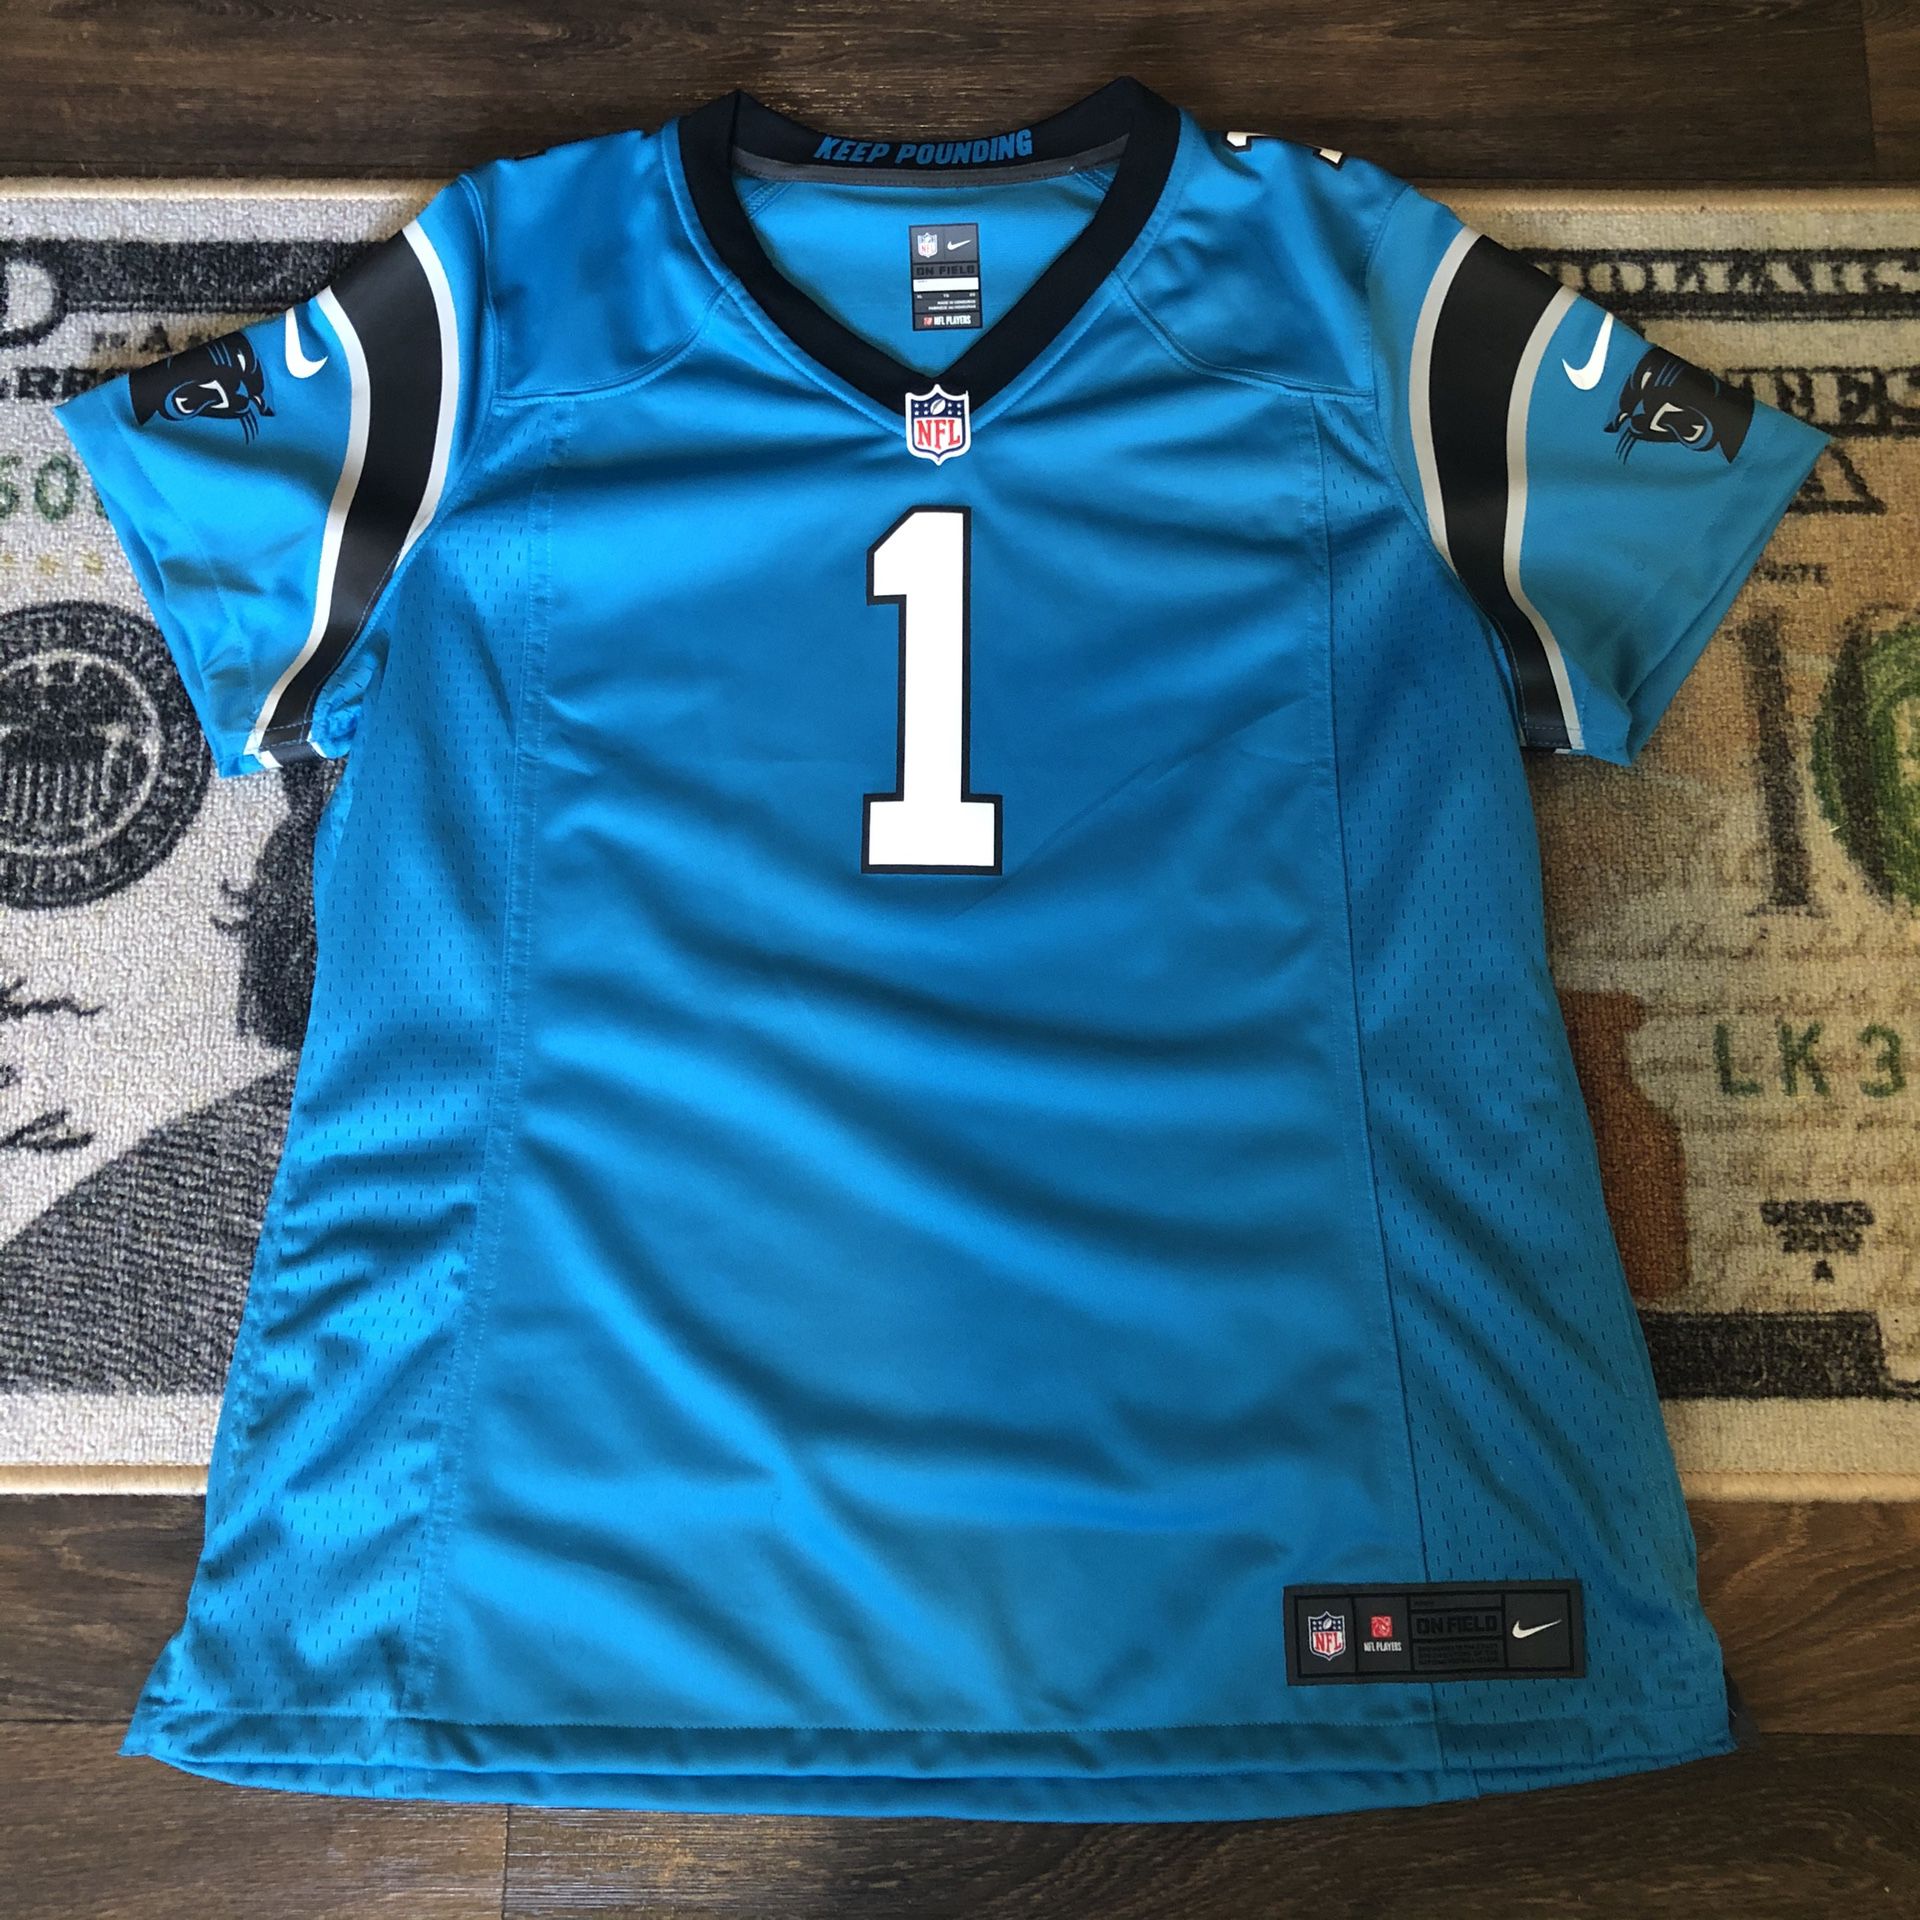 Women’s Cam Newton #1 Carolina Panthers Nike NFL Jersey $30